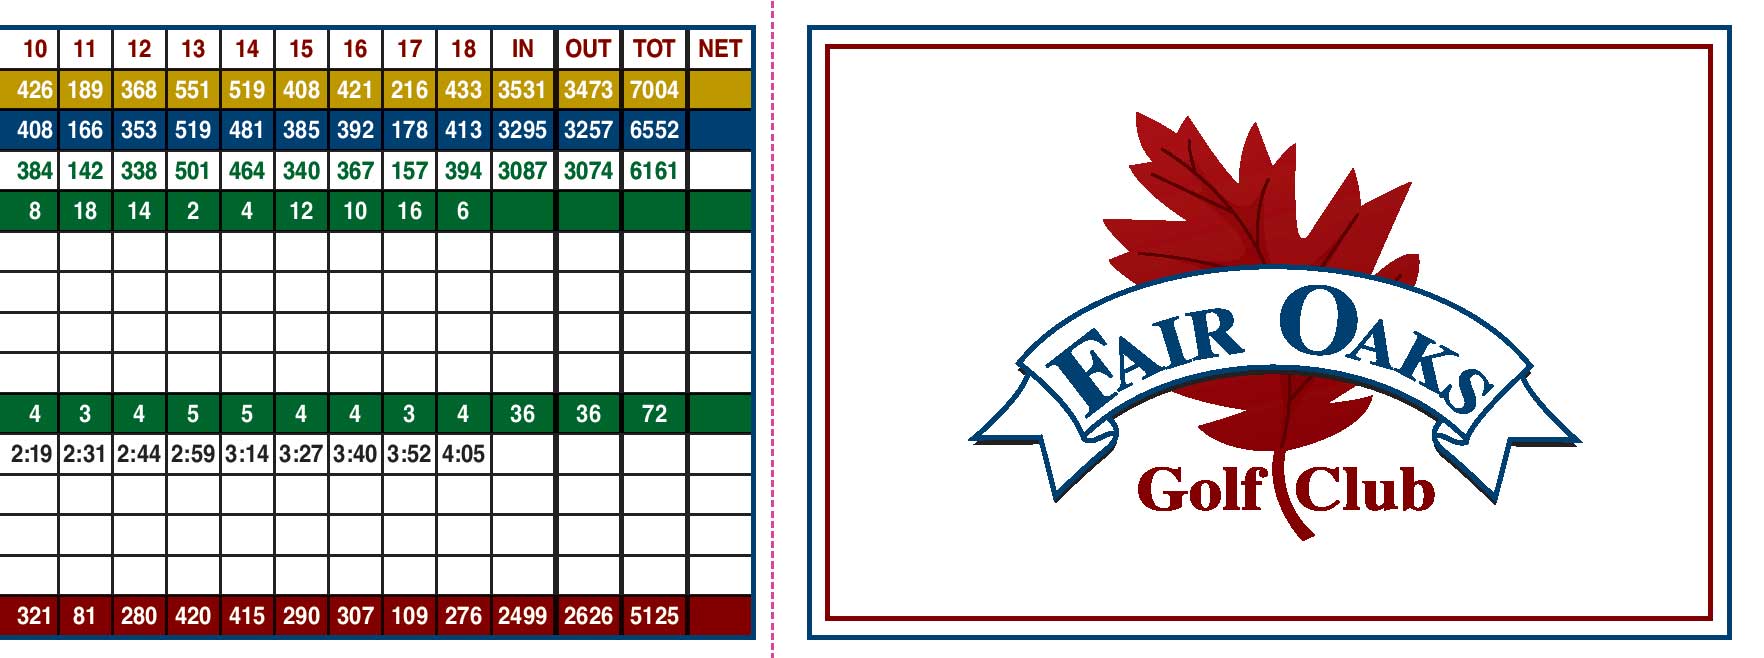 Fair Oaks Scorecard Page2 